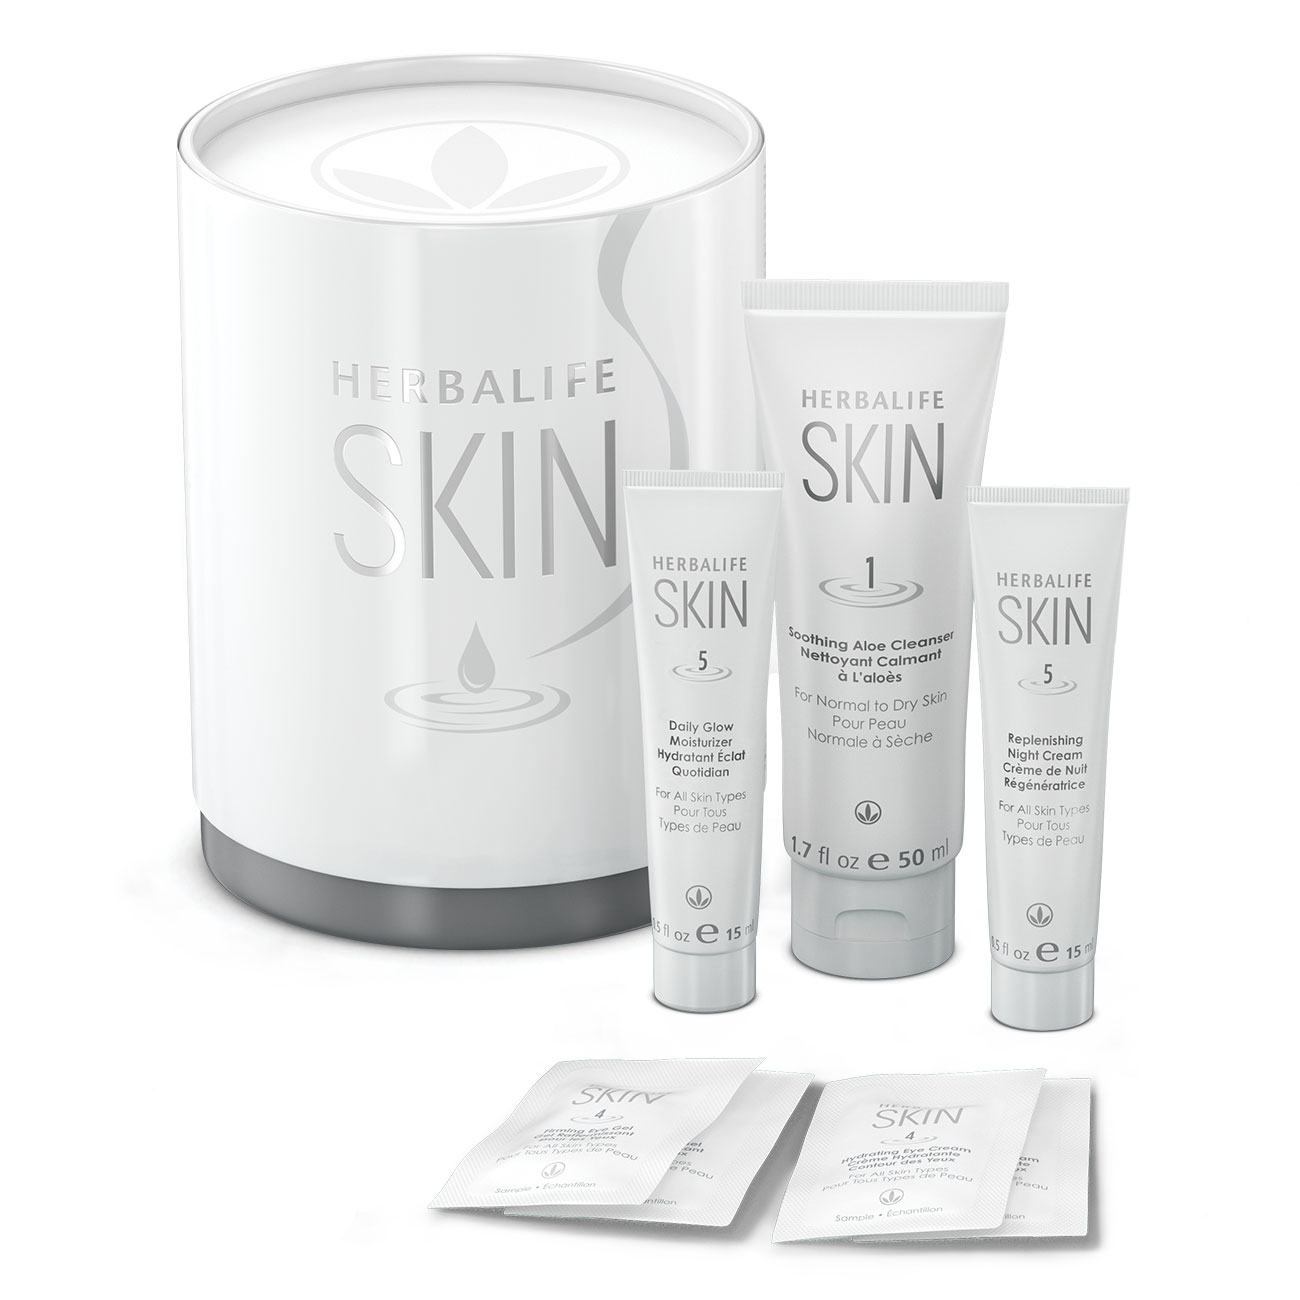 Herbalife SKIN 7 Day Results Kit Skincare product shot.